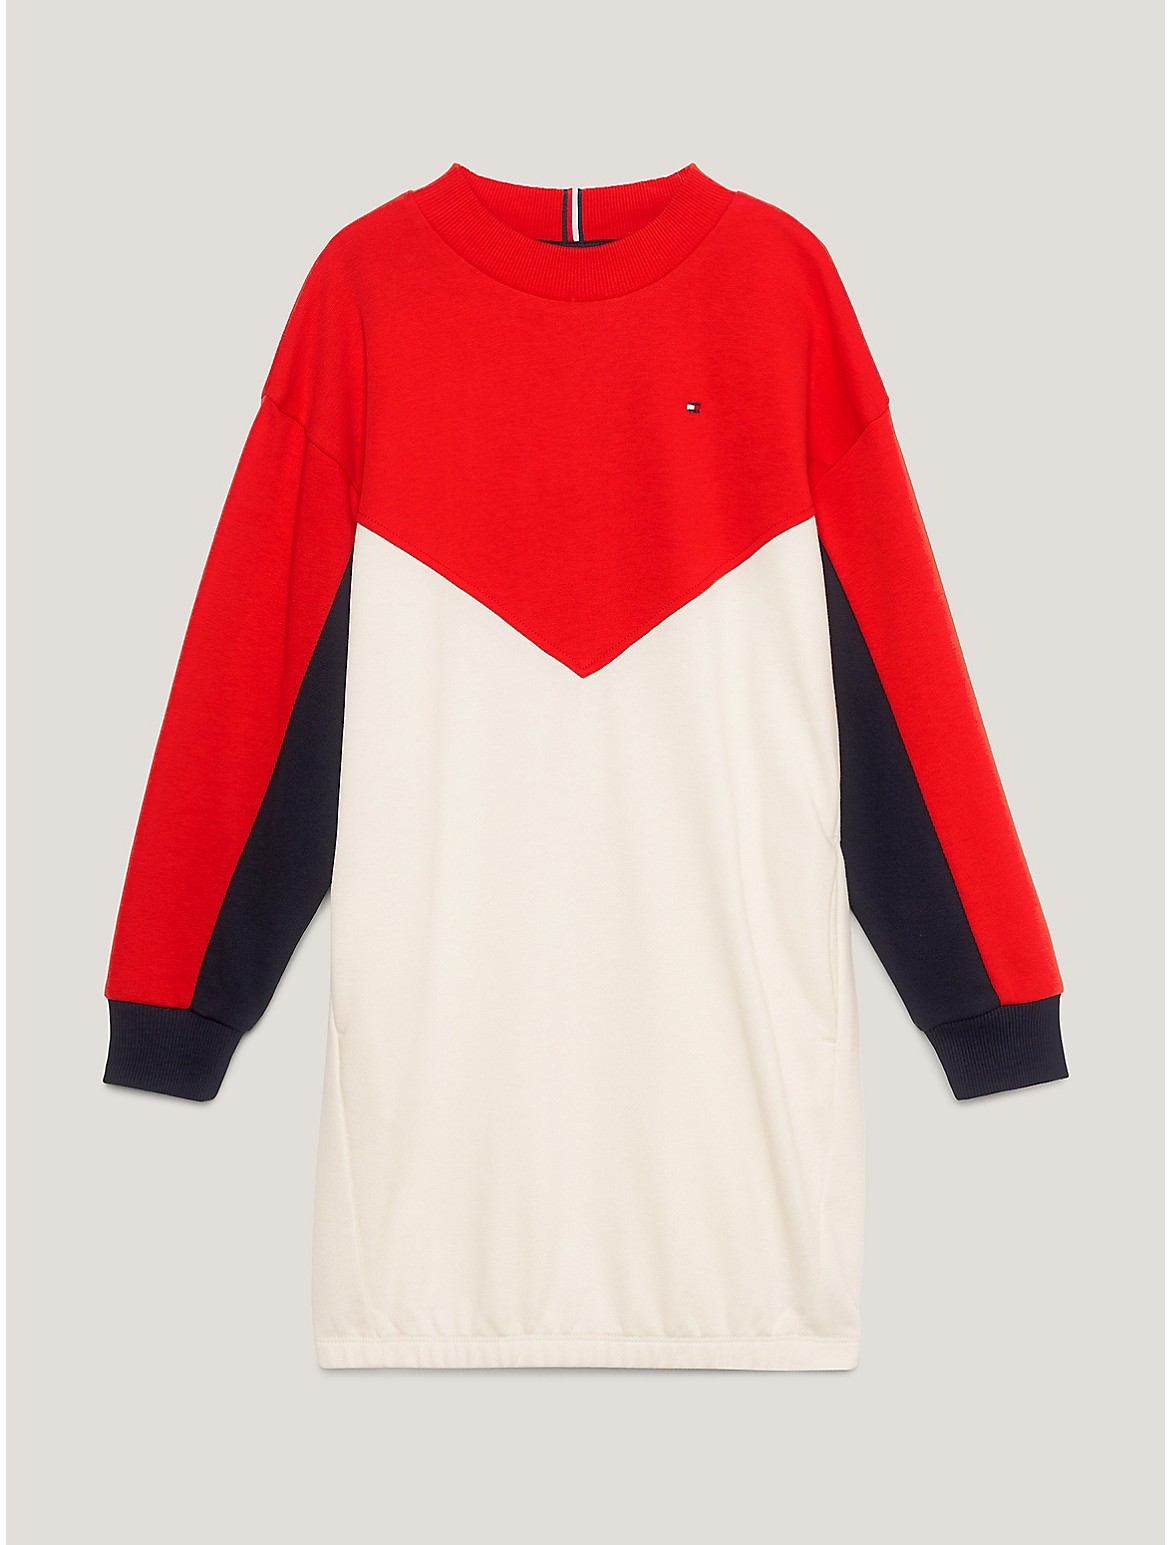 Tommy Hilfiger Girls' Kids' Colorblock Sweatshirt Dress - Multi - 12